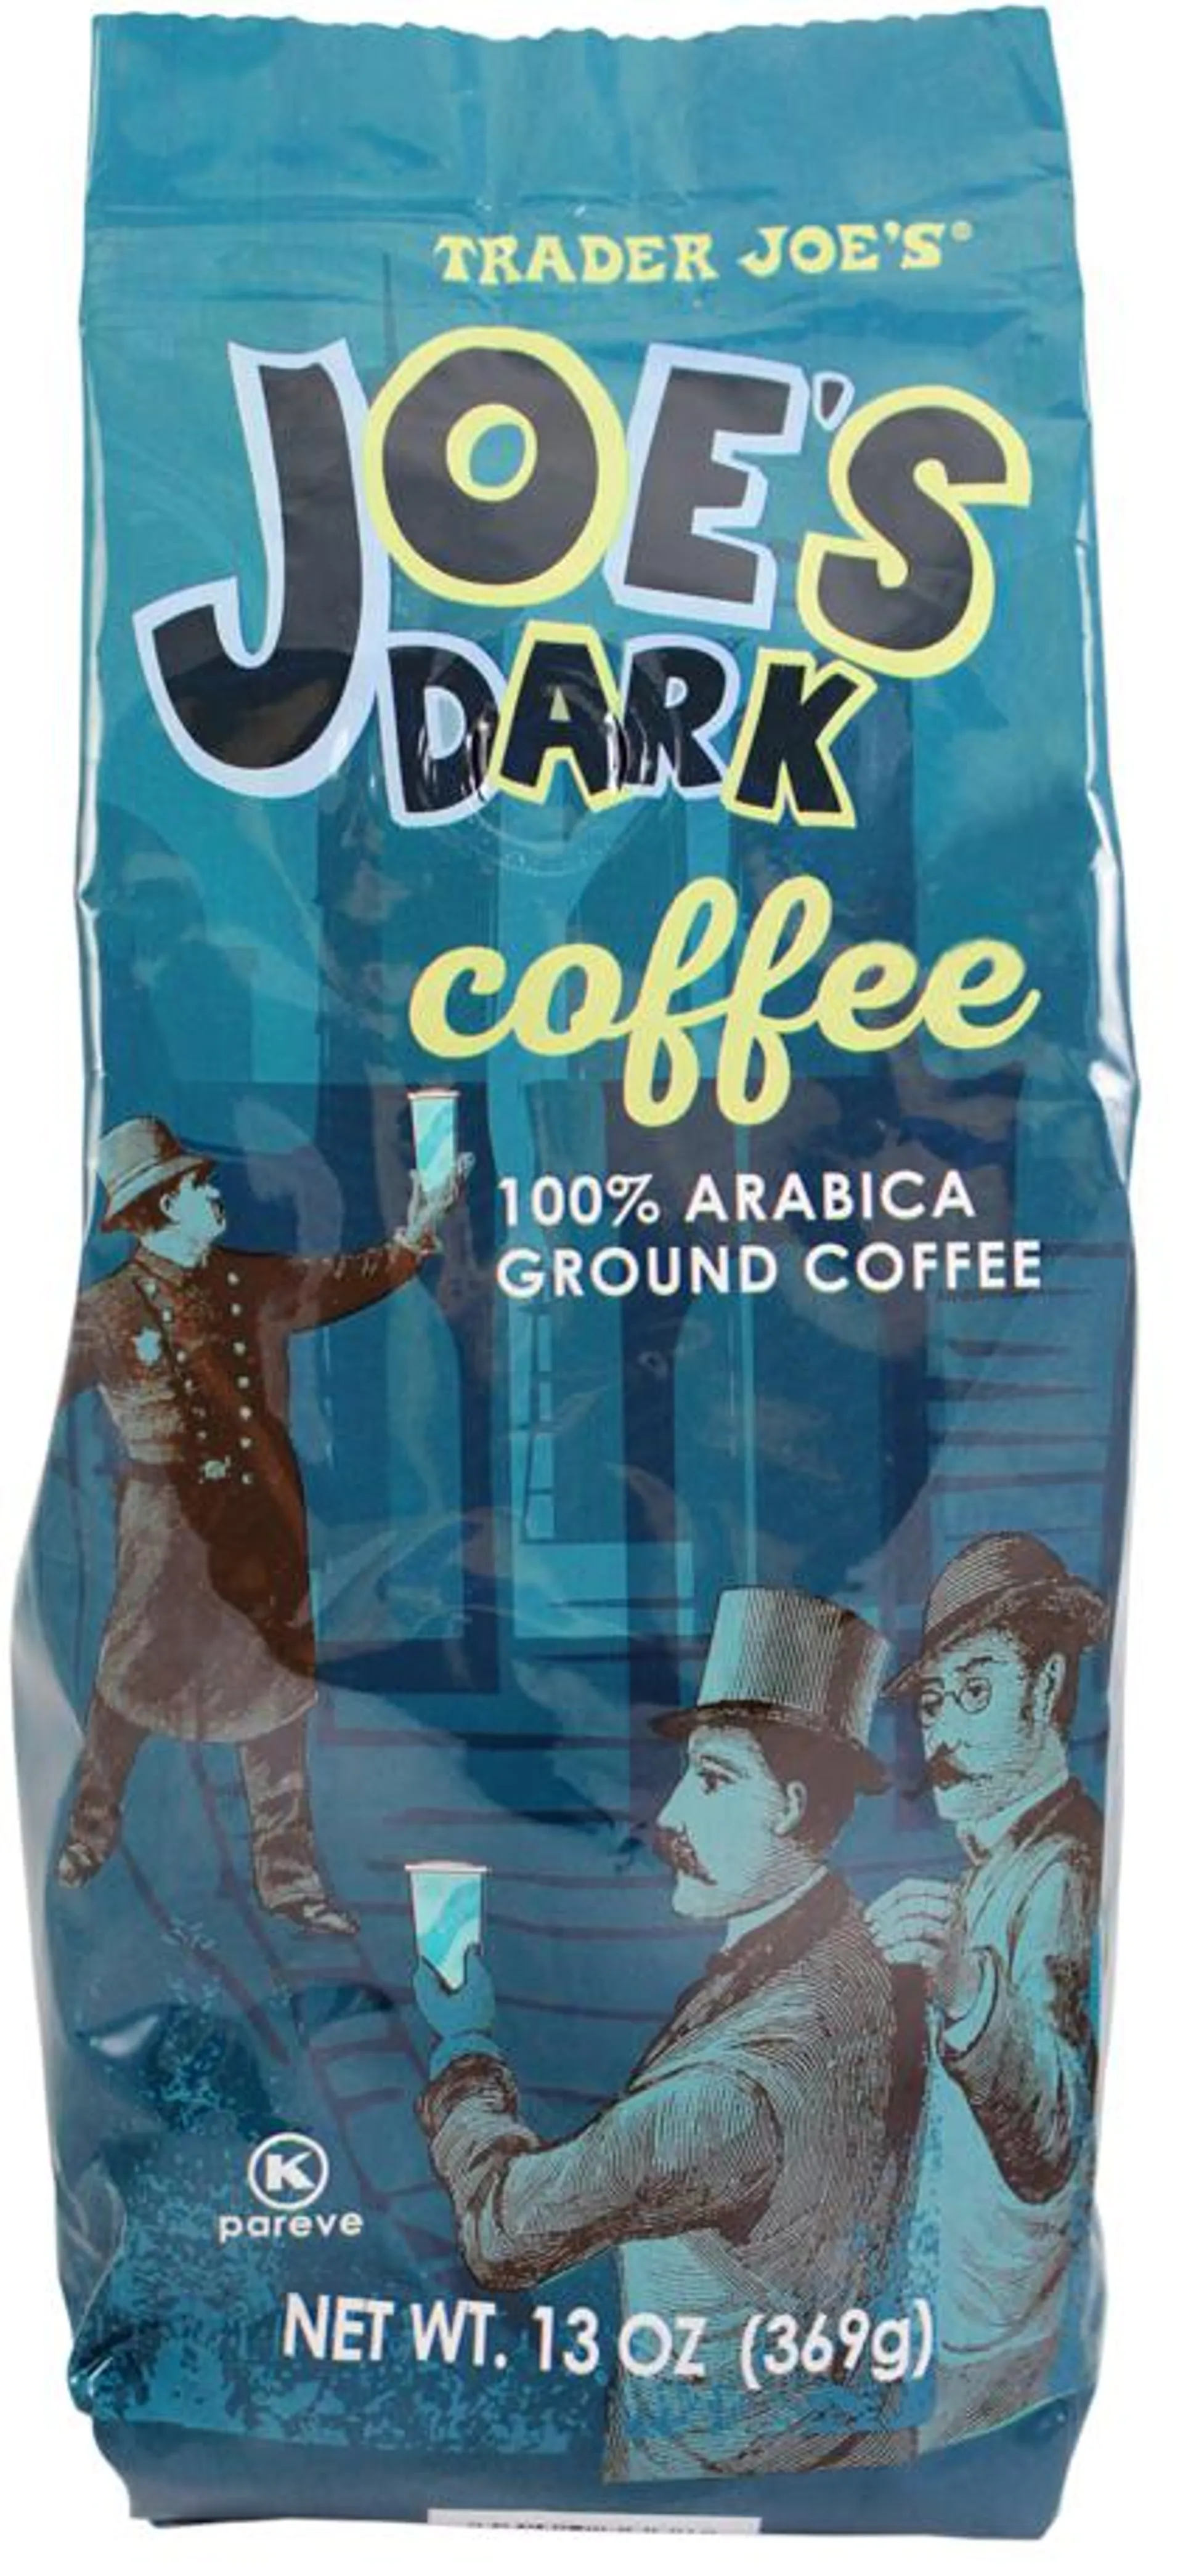 Joe's Dark Ground Coffee